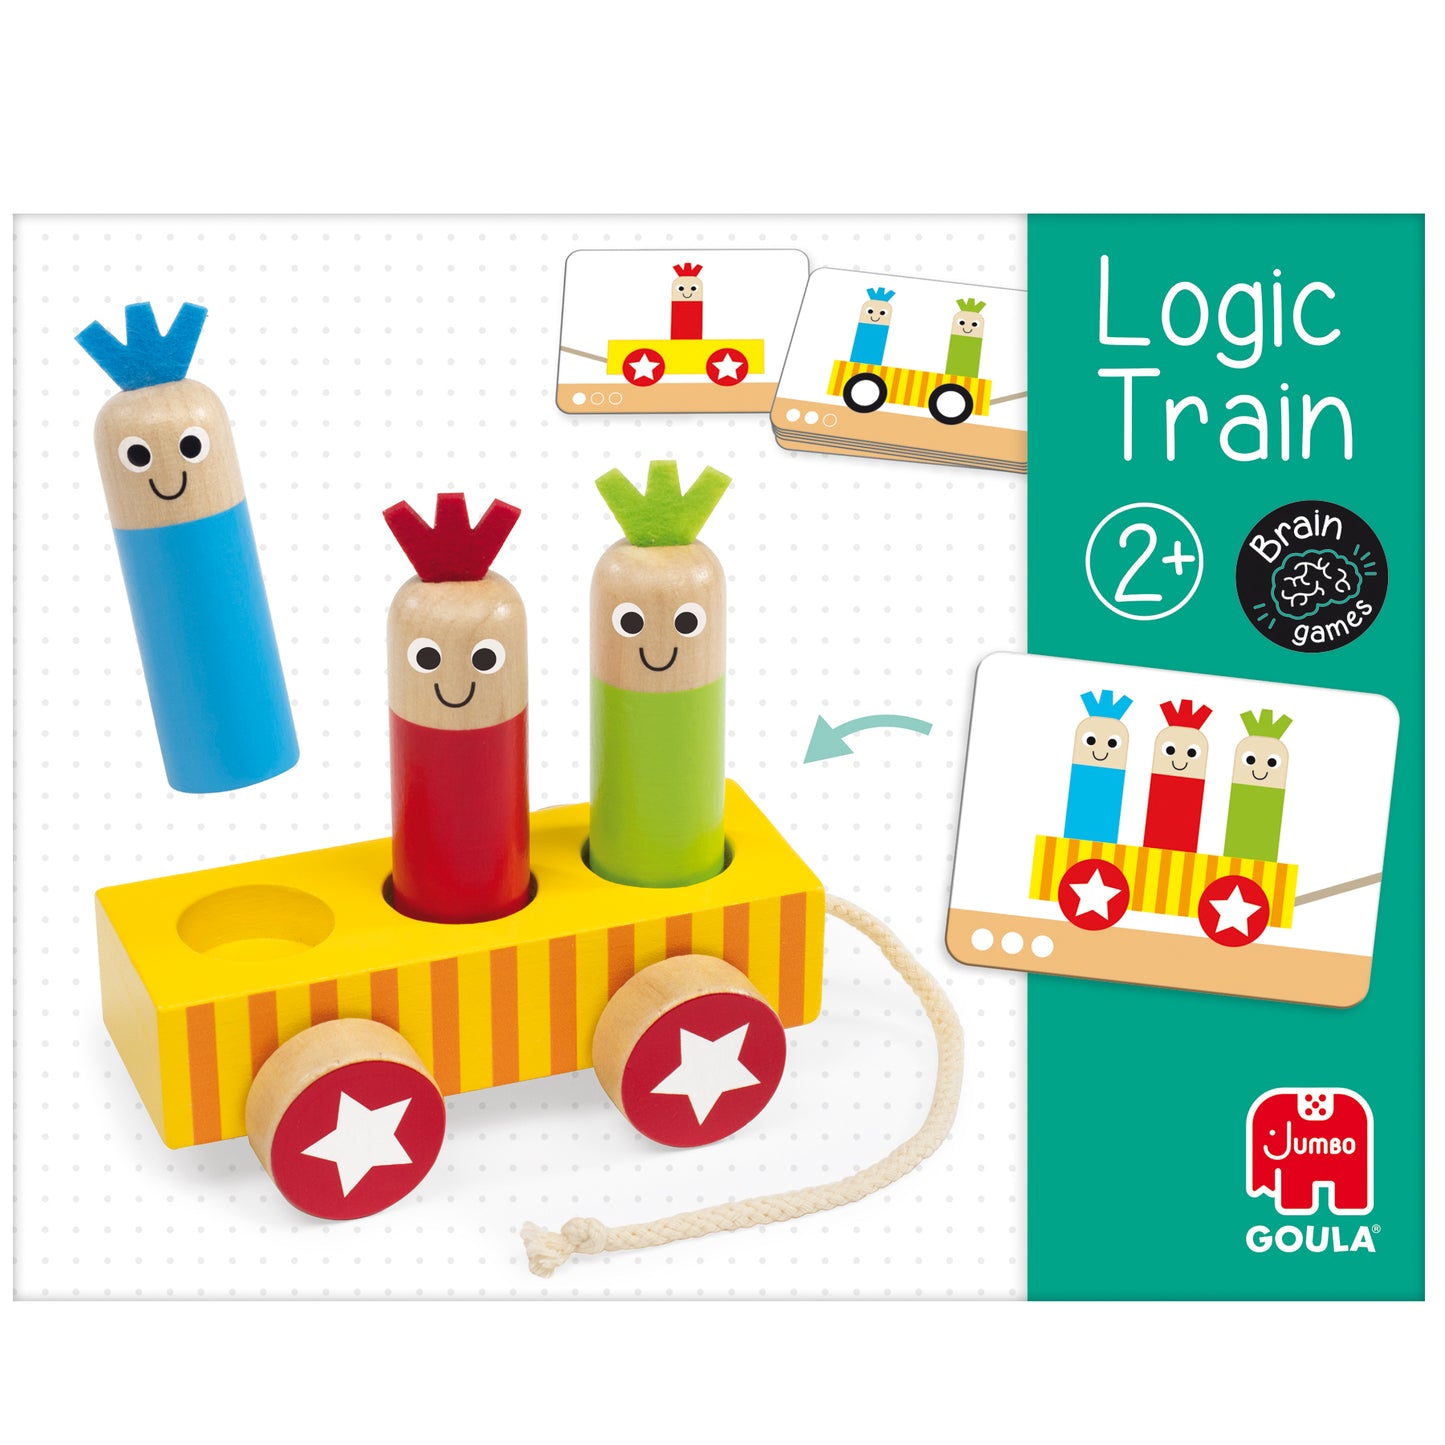 Logic Train - product image - Jumboplay.com